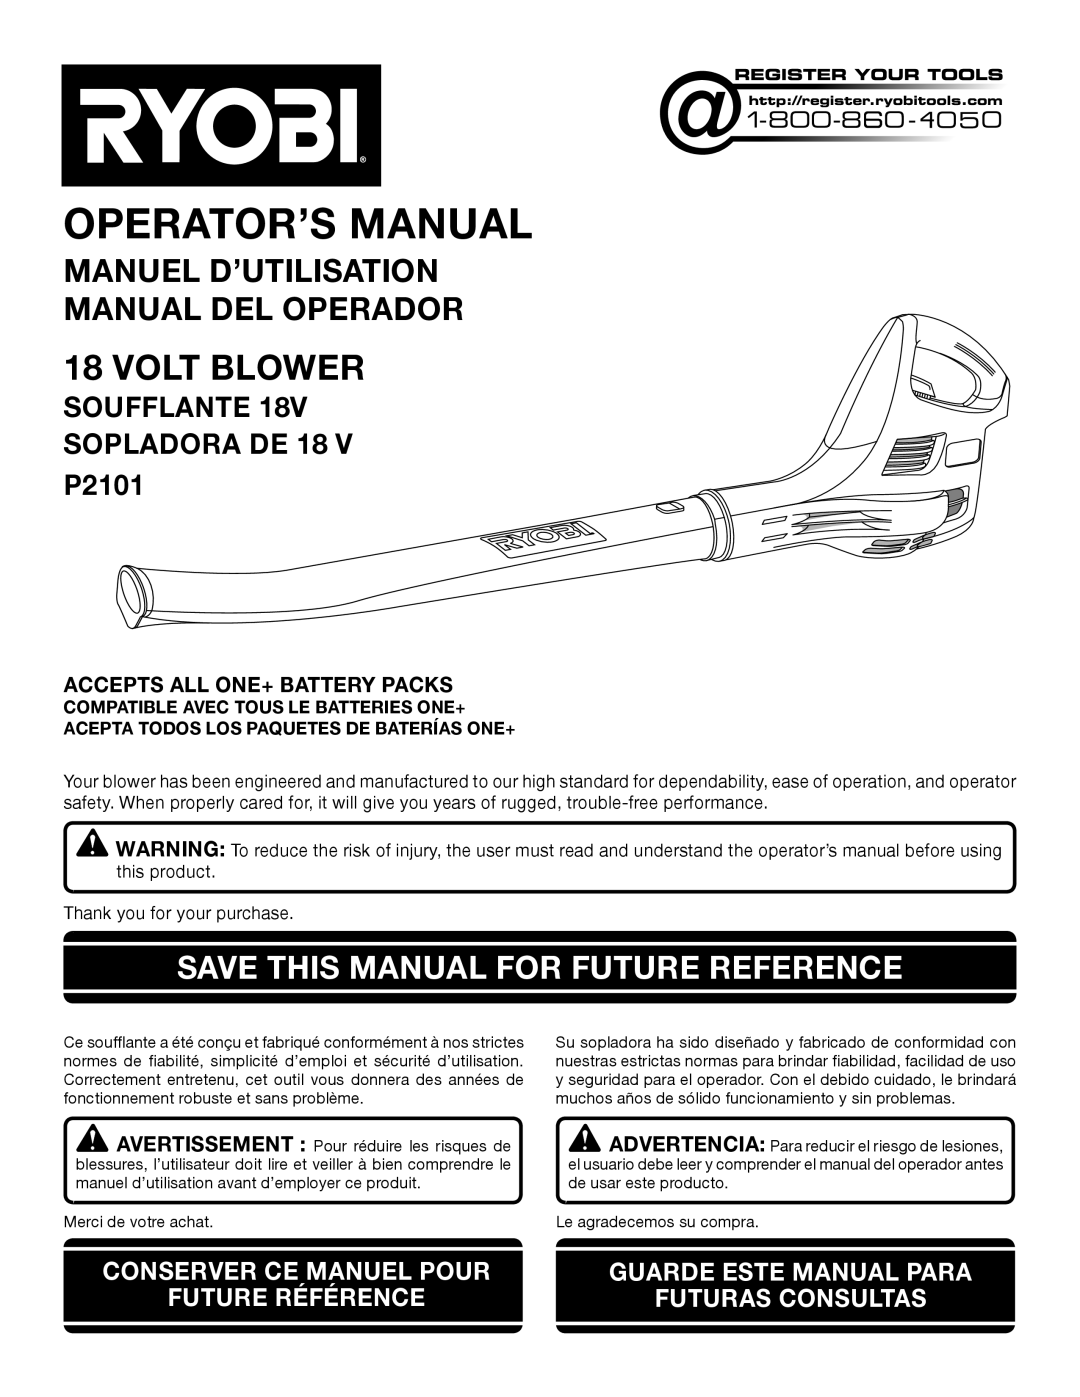 Ryobi manuel dutilisation Volt Blower, Manuel D’Utilisation Manual Del Operador, SOUFFLANTE SOPLADORA DE 18 P2101 